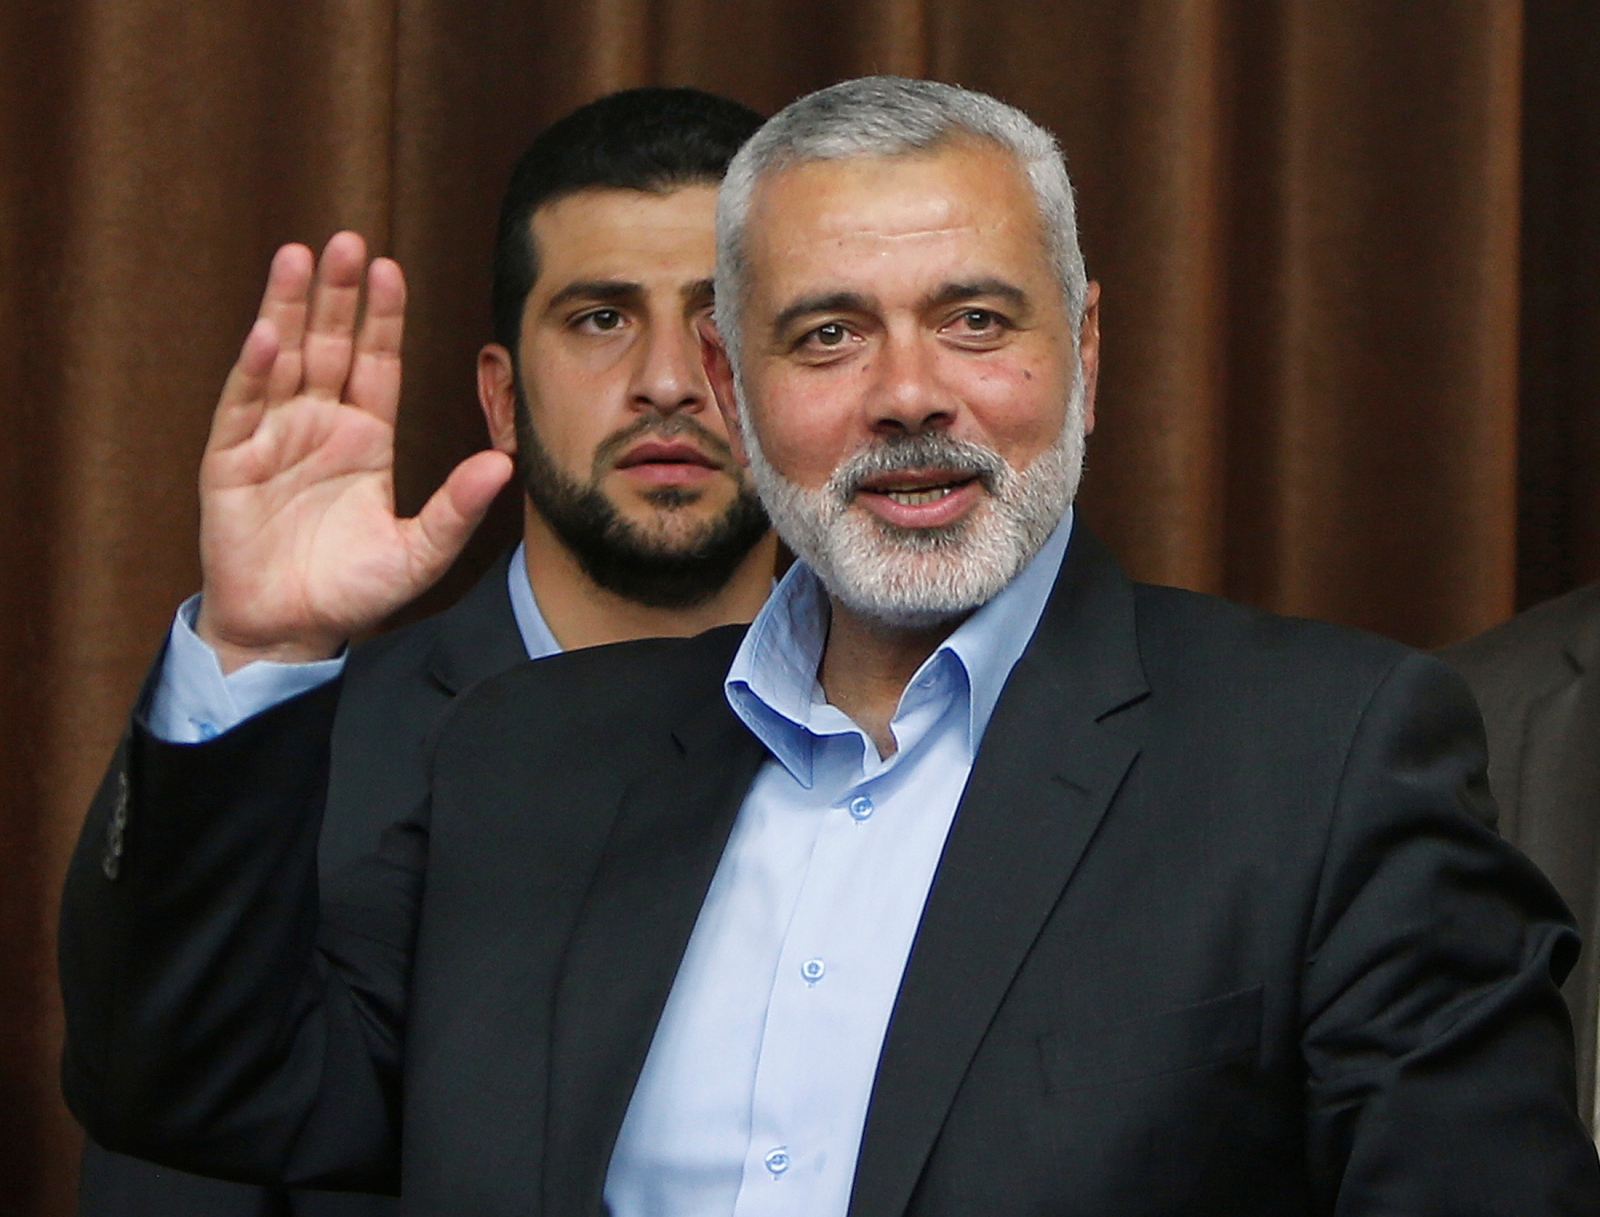 Hamas leader Ismail Haniyeh